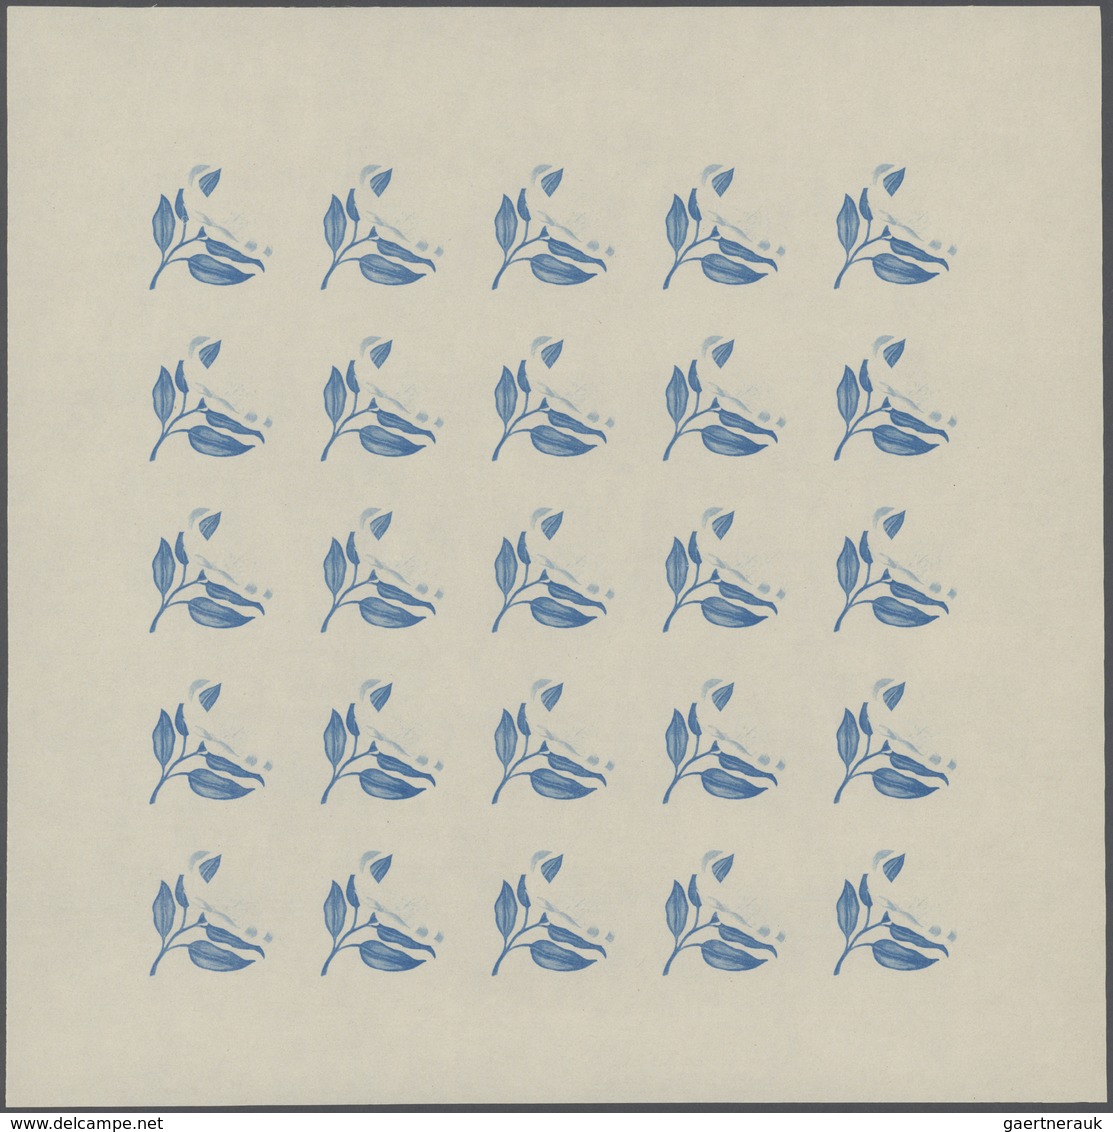 25064 Thematik: Flora, Botanik / flora, botany, bloom: 1966, Burundi. Progressive proofs set of sheets for